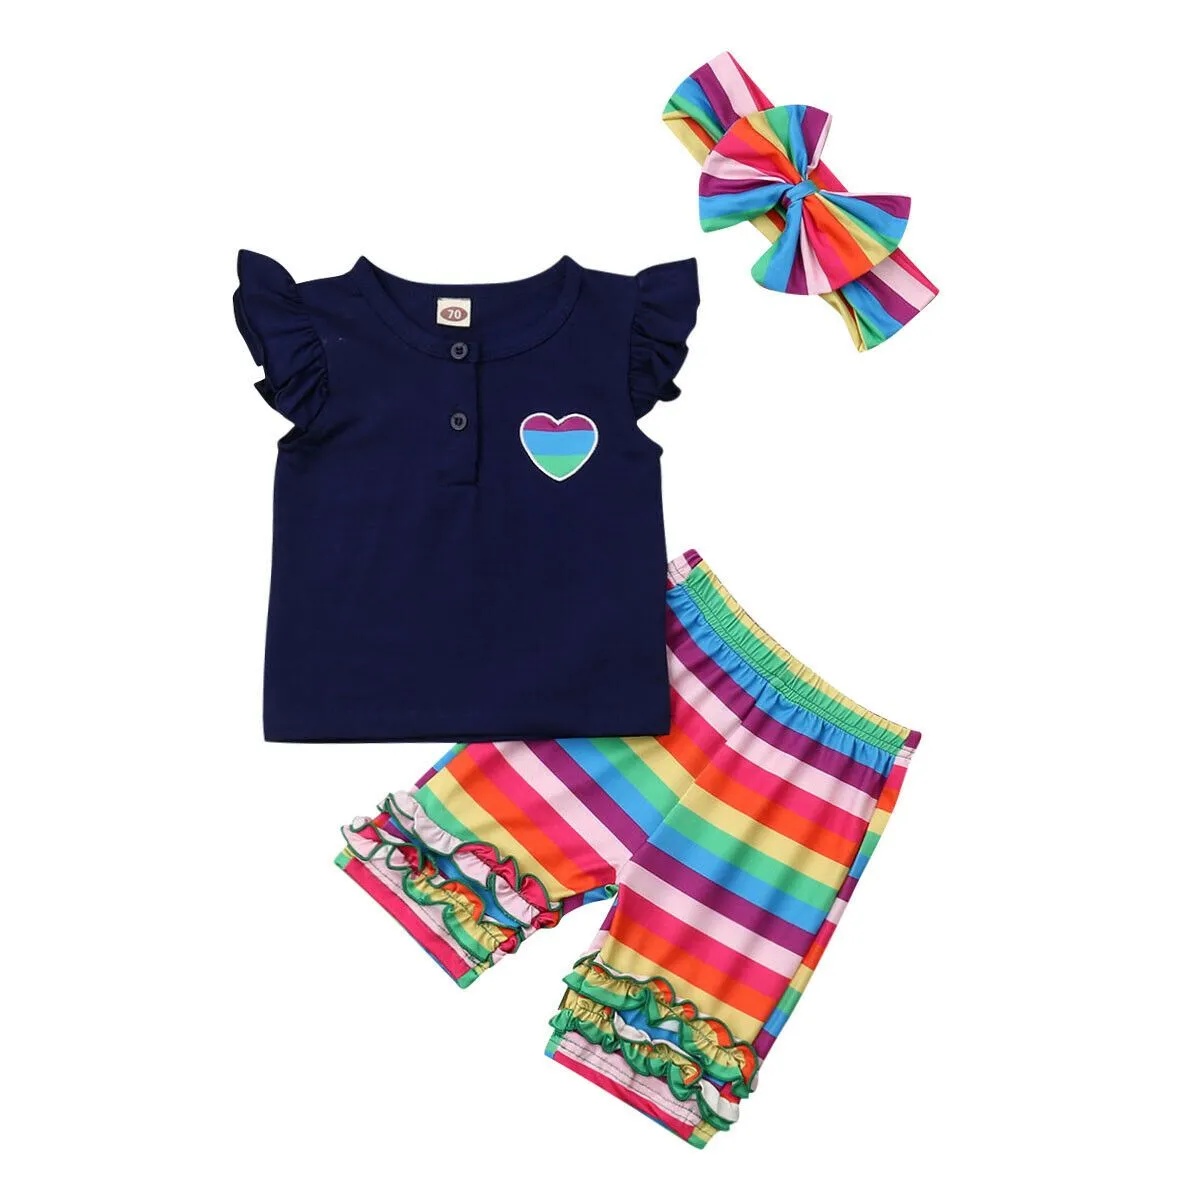 Toddler Baby Girl Outfits Clothes Summer Tshirt TopsPants Short 3PCS Set2761124